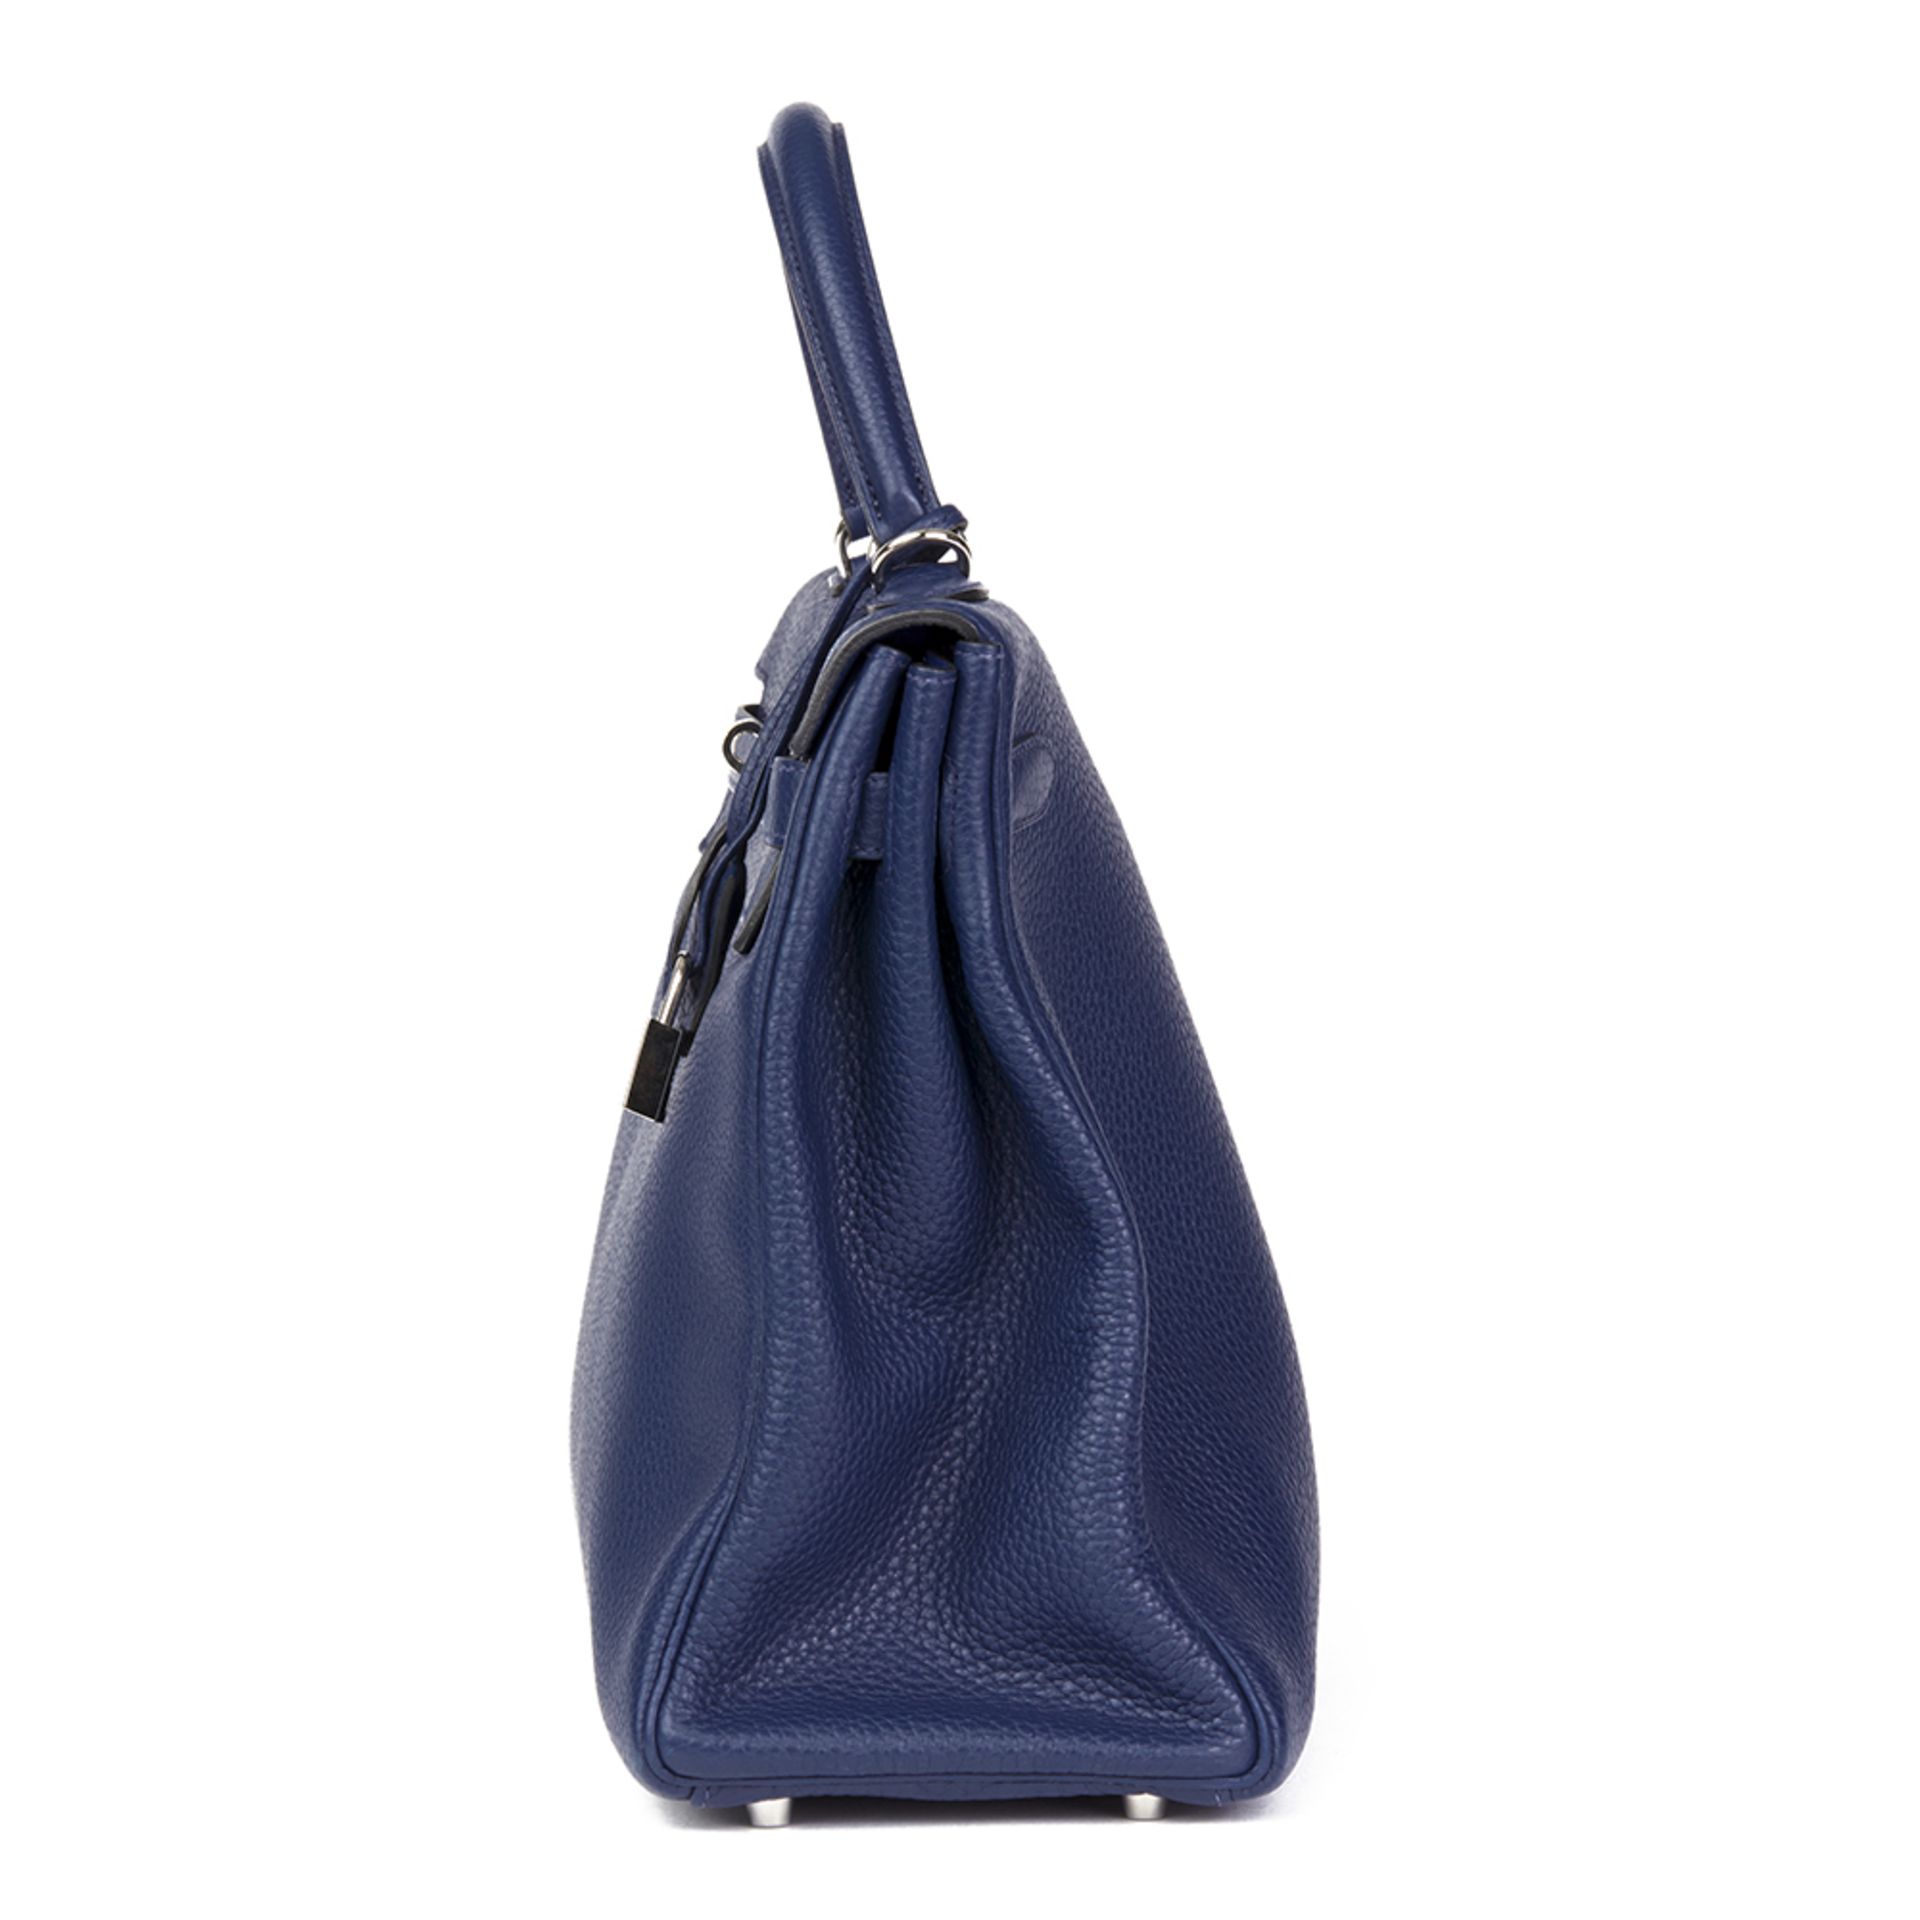 Hermès Bleu Saphir Togo Leather Kelly 35cm Retourne - Image 2 of 10